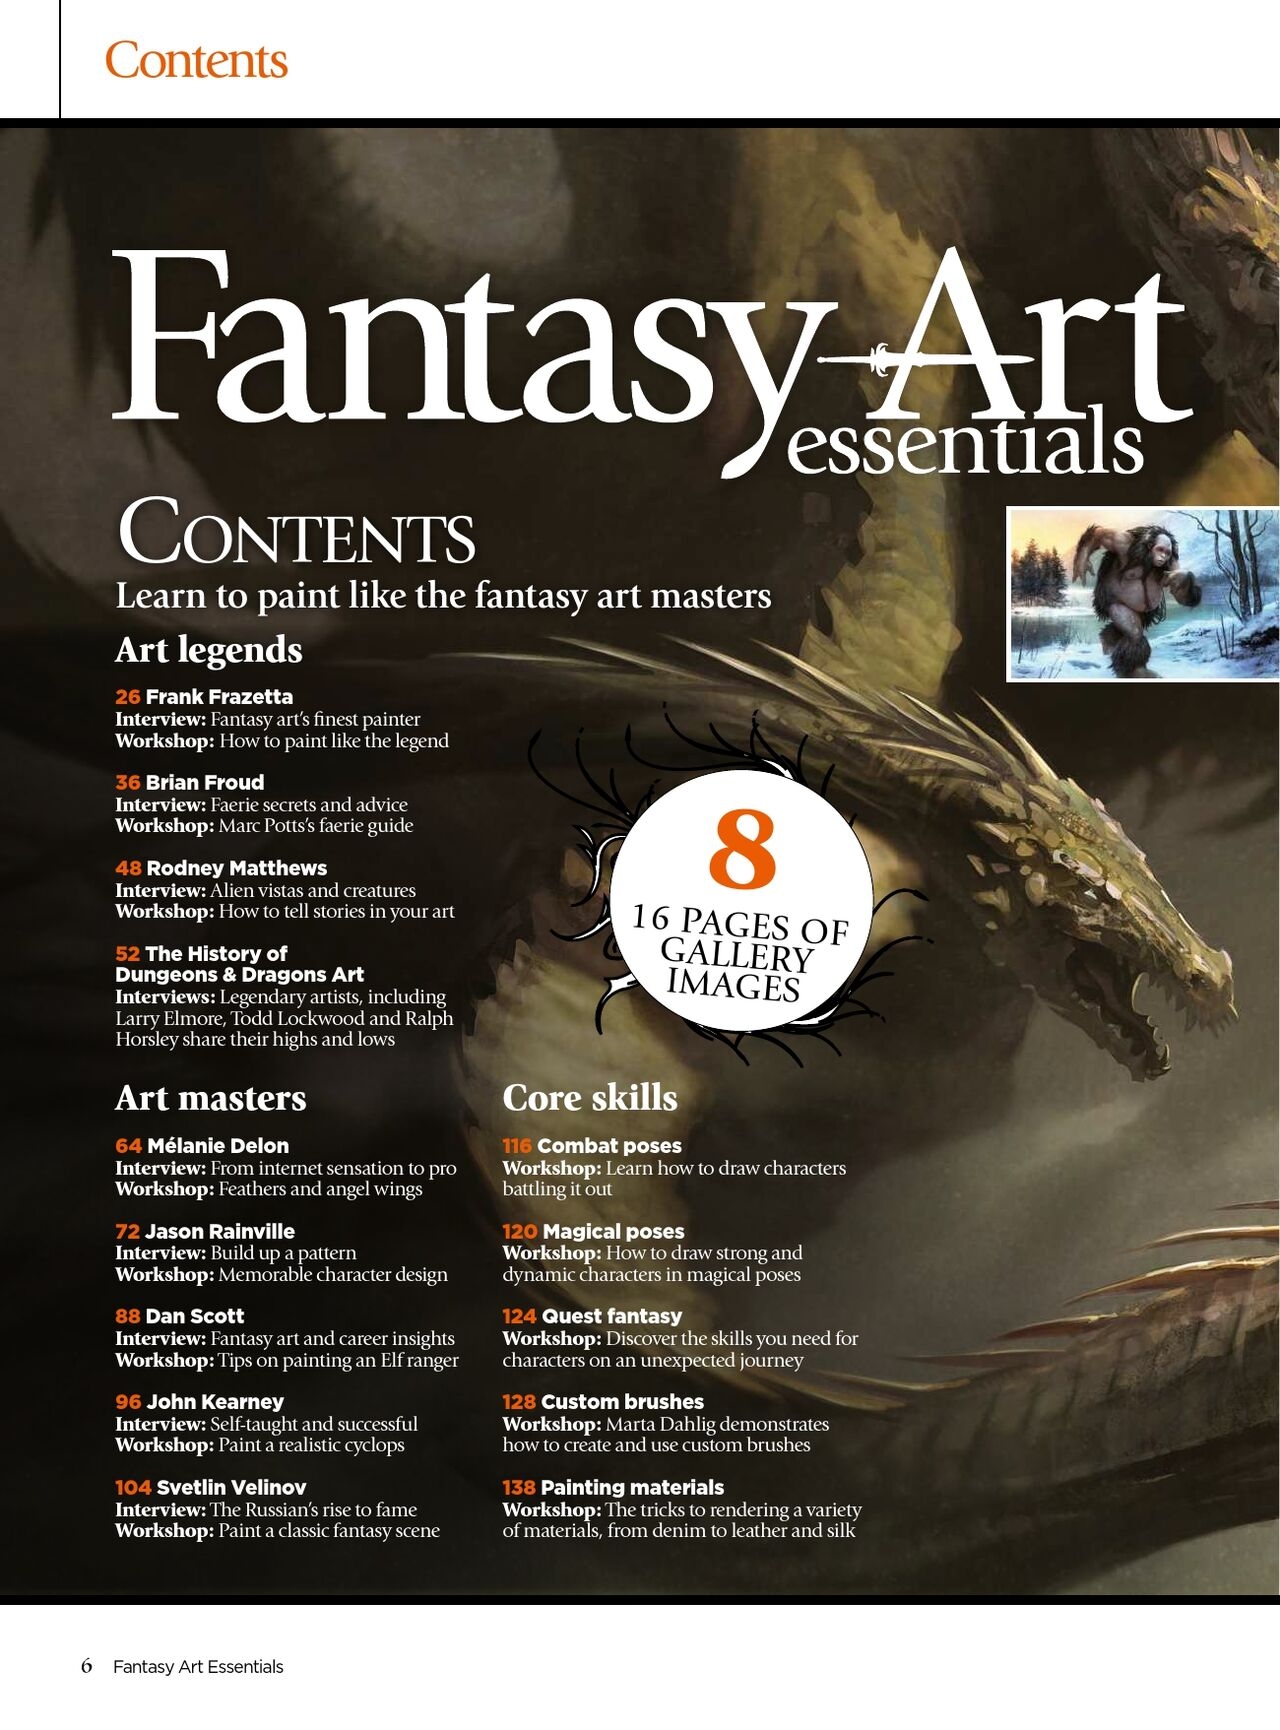 ImagineFX 2021 - Fantasy Art Essentials [English] 5